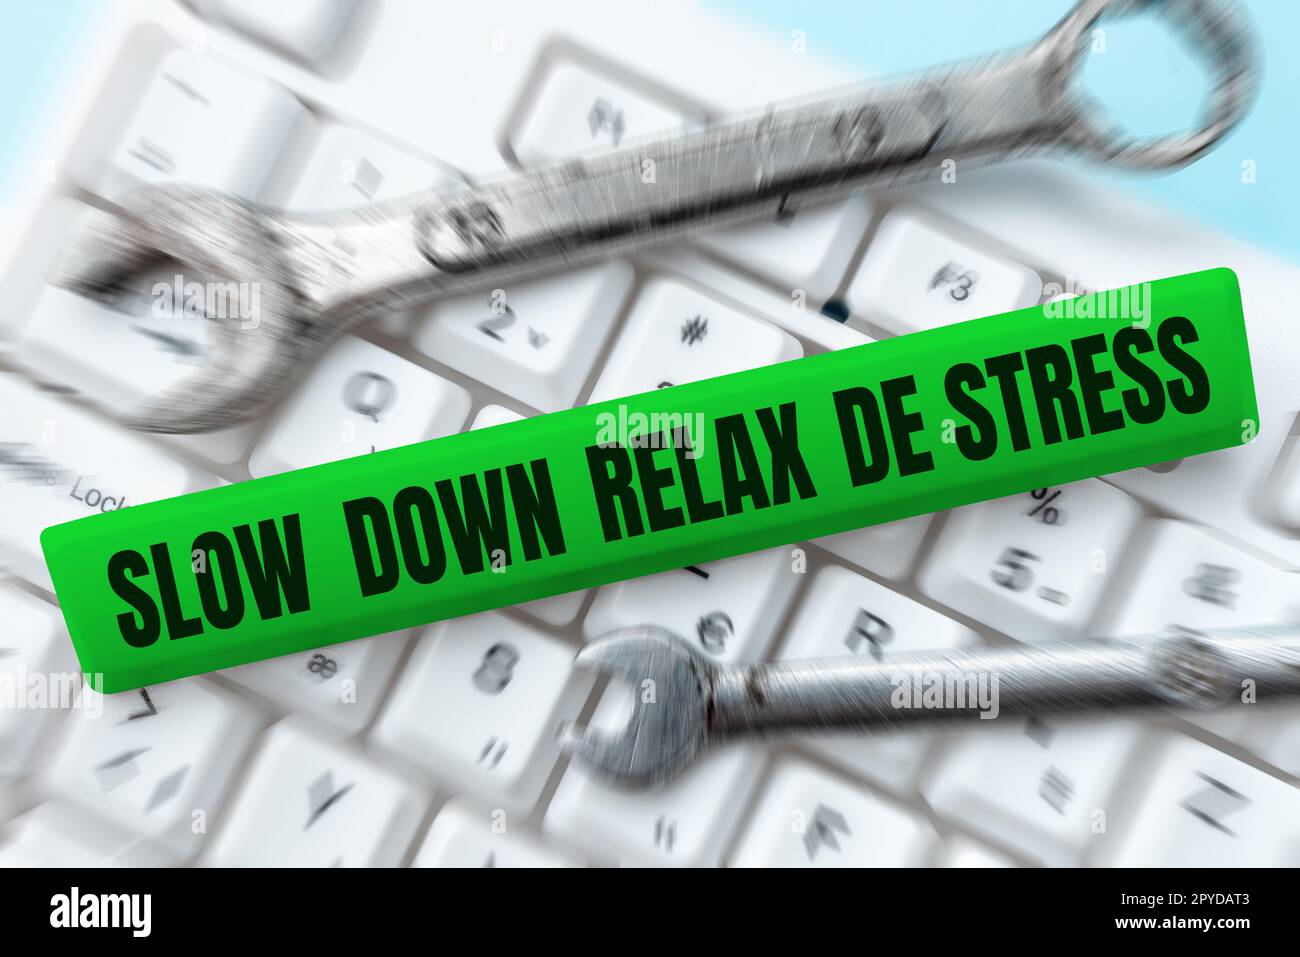 Textbeschriftung mit Slow Down Relax De Stress. Konzept bedeutet Pause, Stresspegel reduzieren, Ruhe bewahren Stockfoto